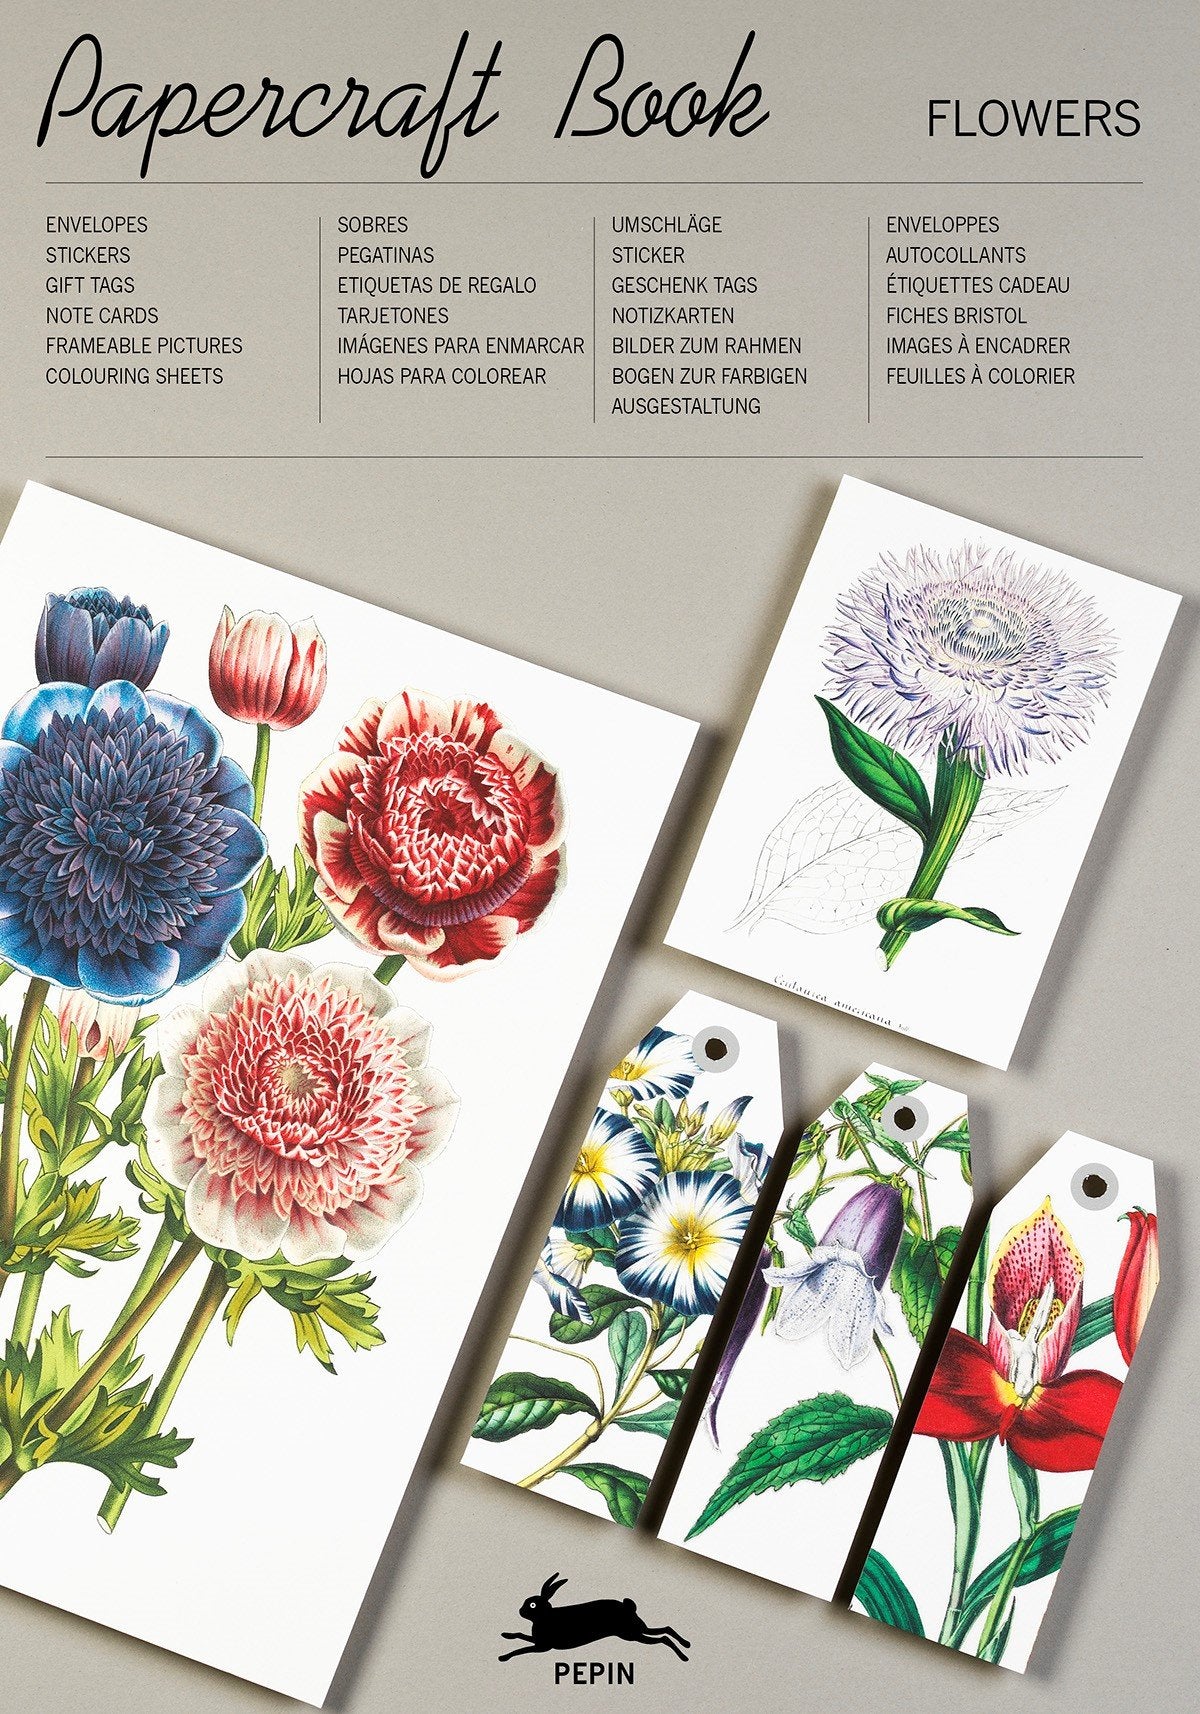 Papercraft Book - Flowers